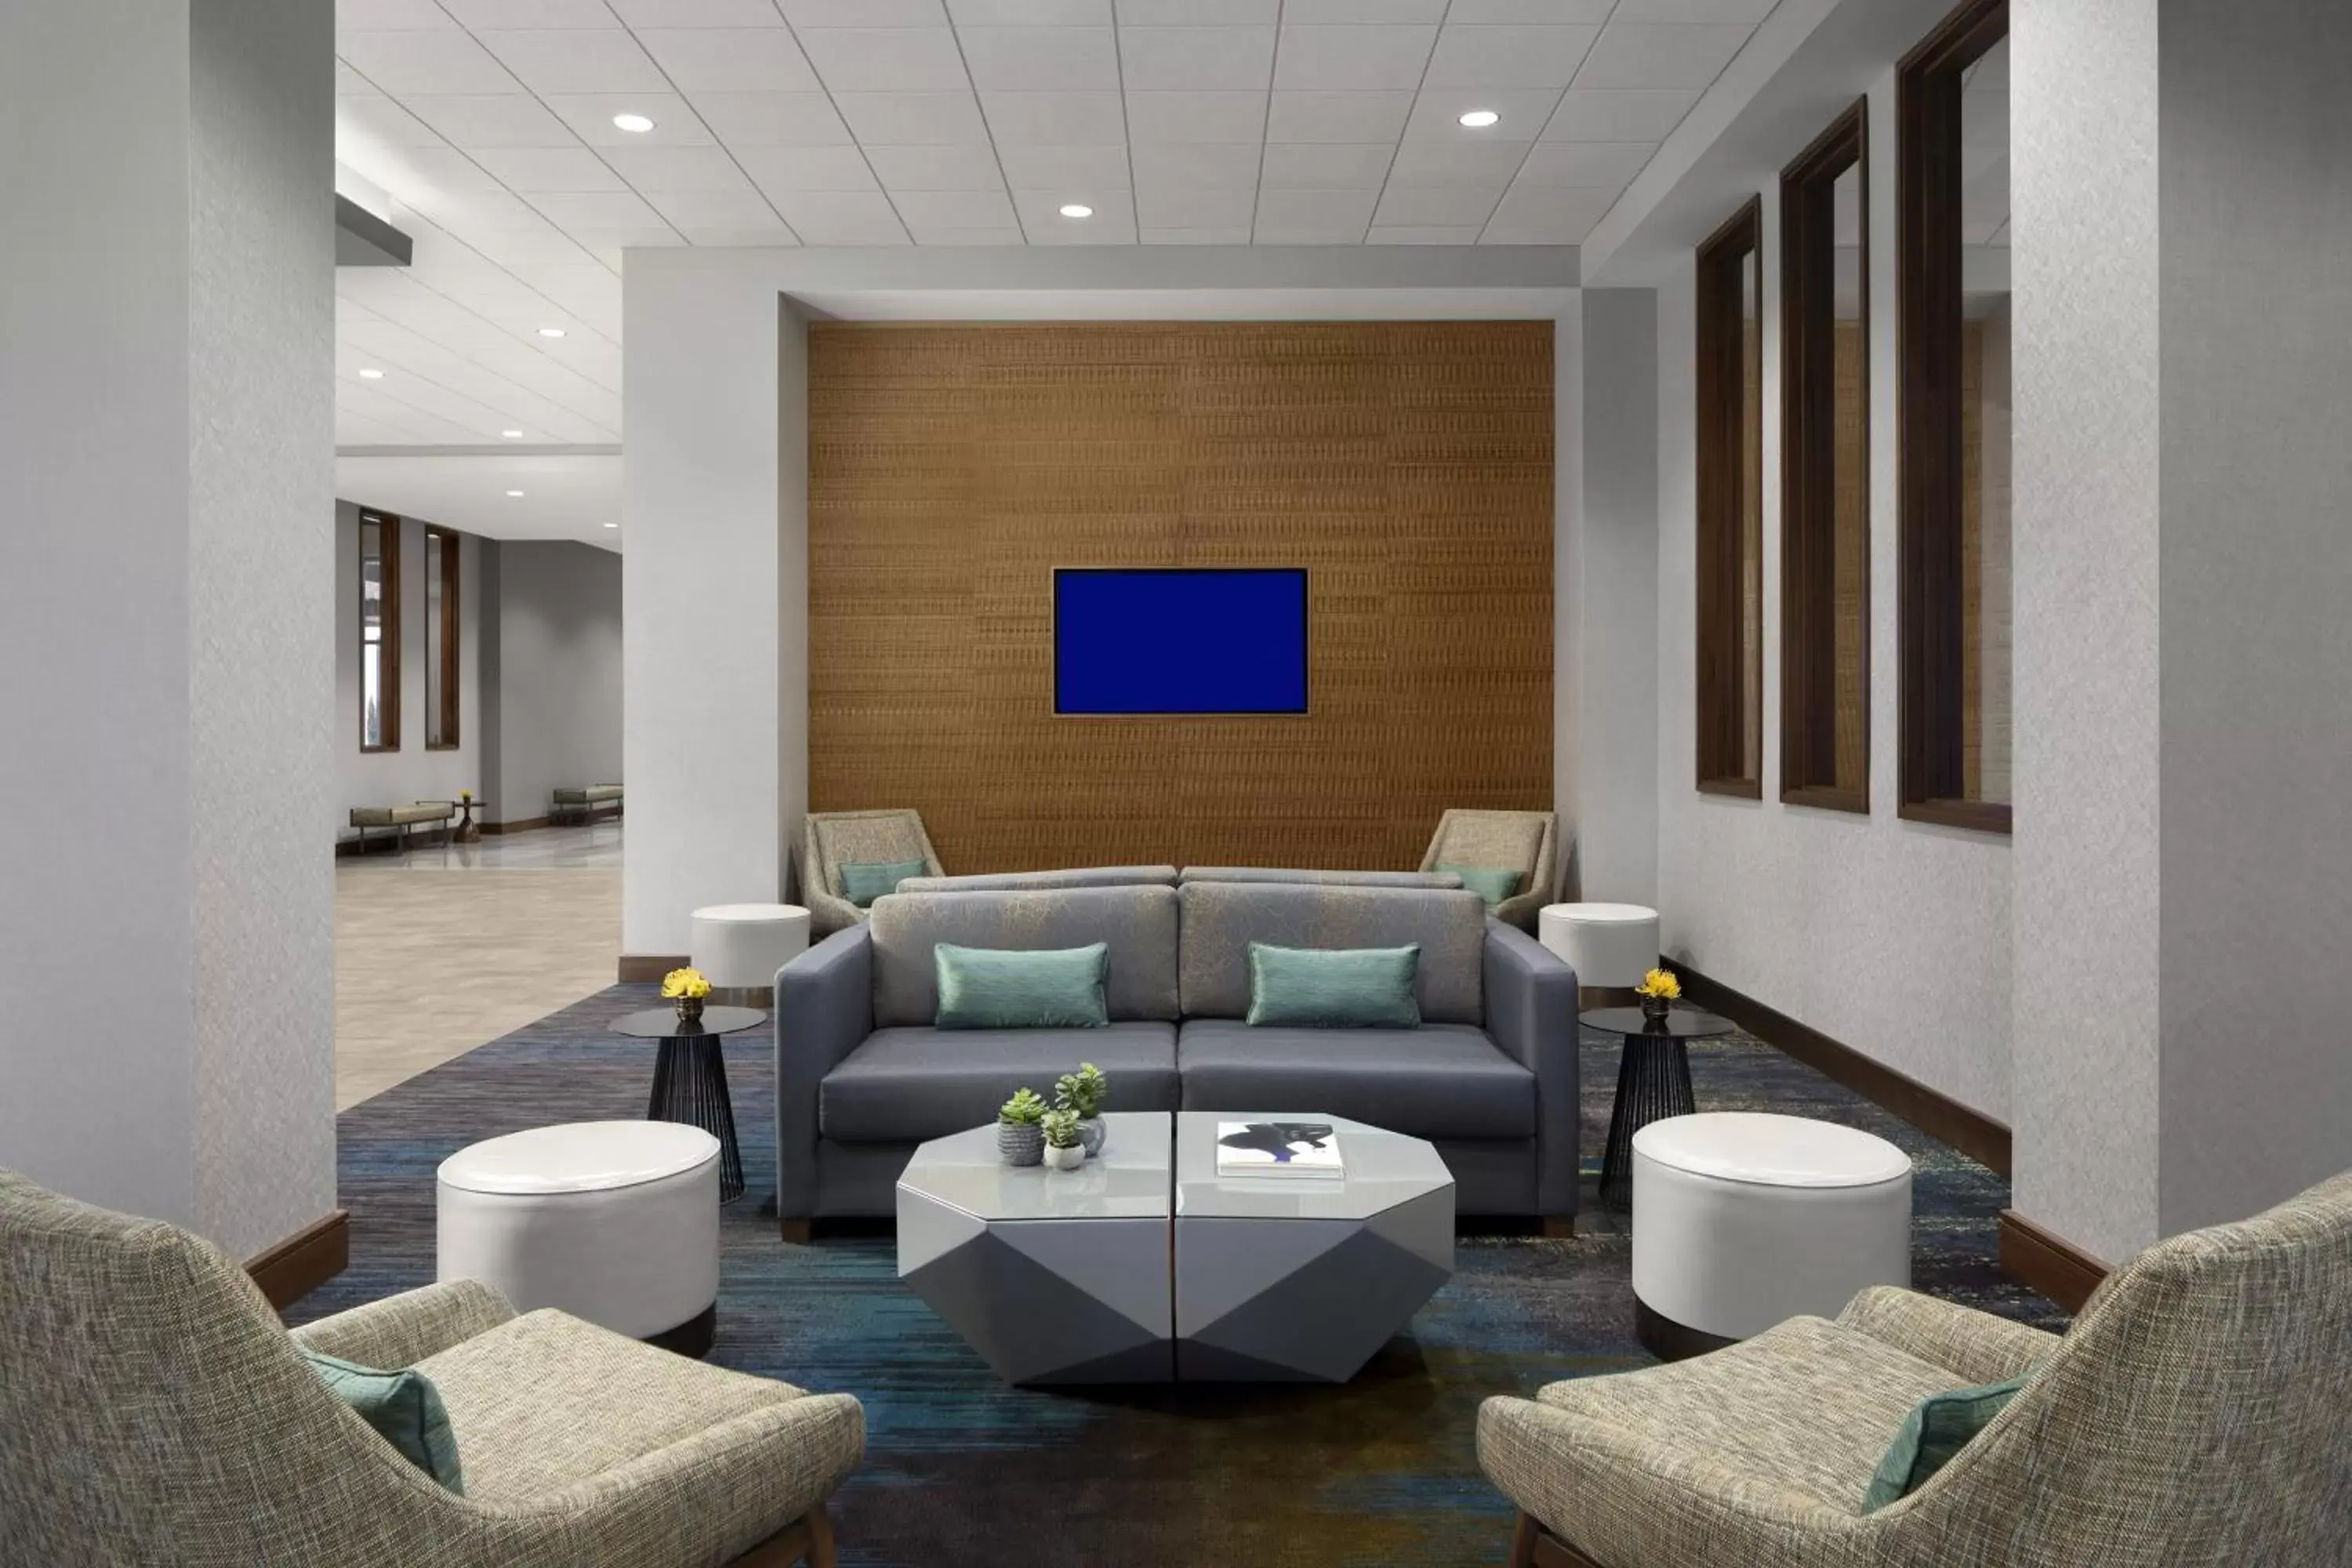 Lobby or reception in Marriott Dallas Allen Hotel & Convention Center